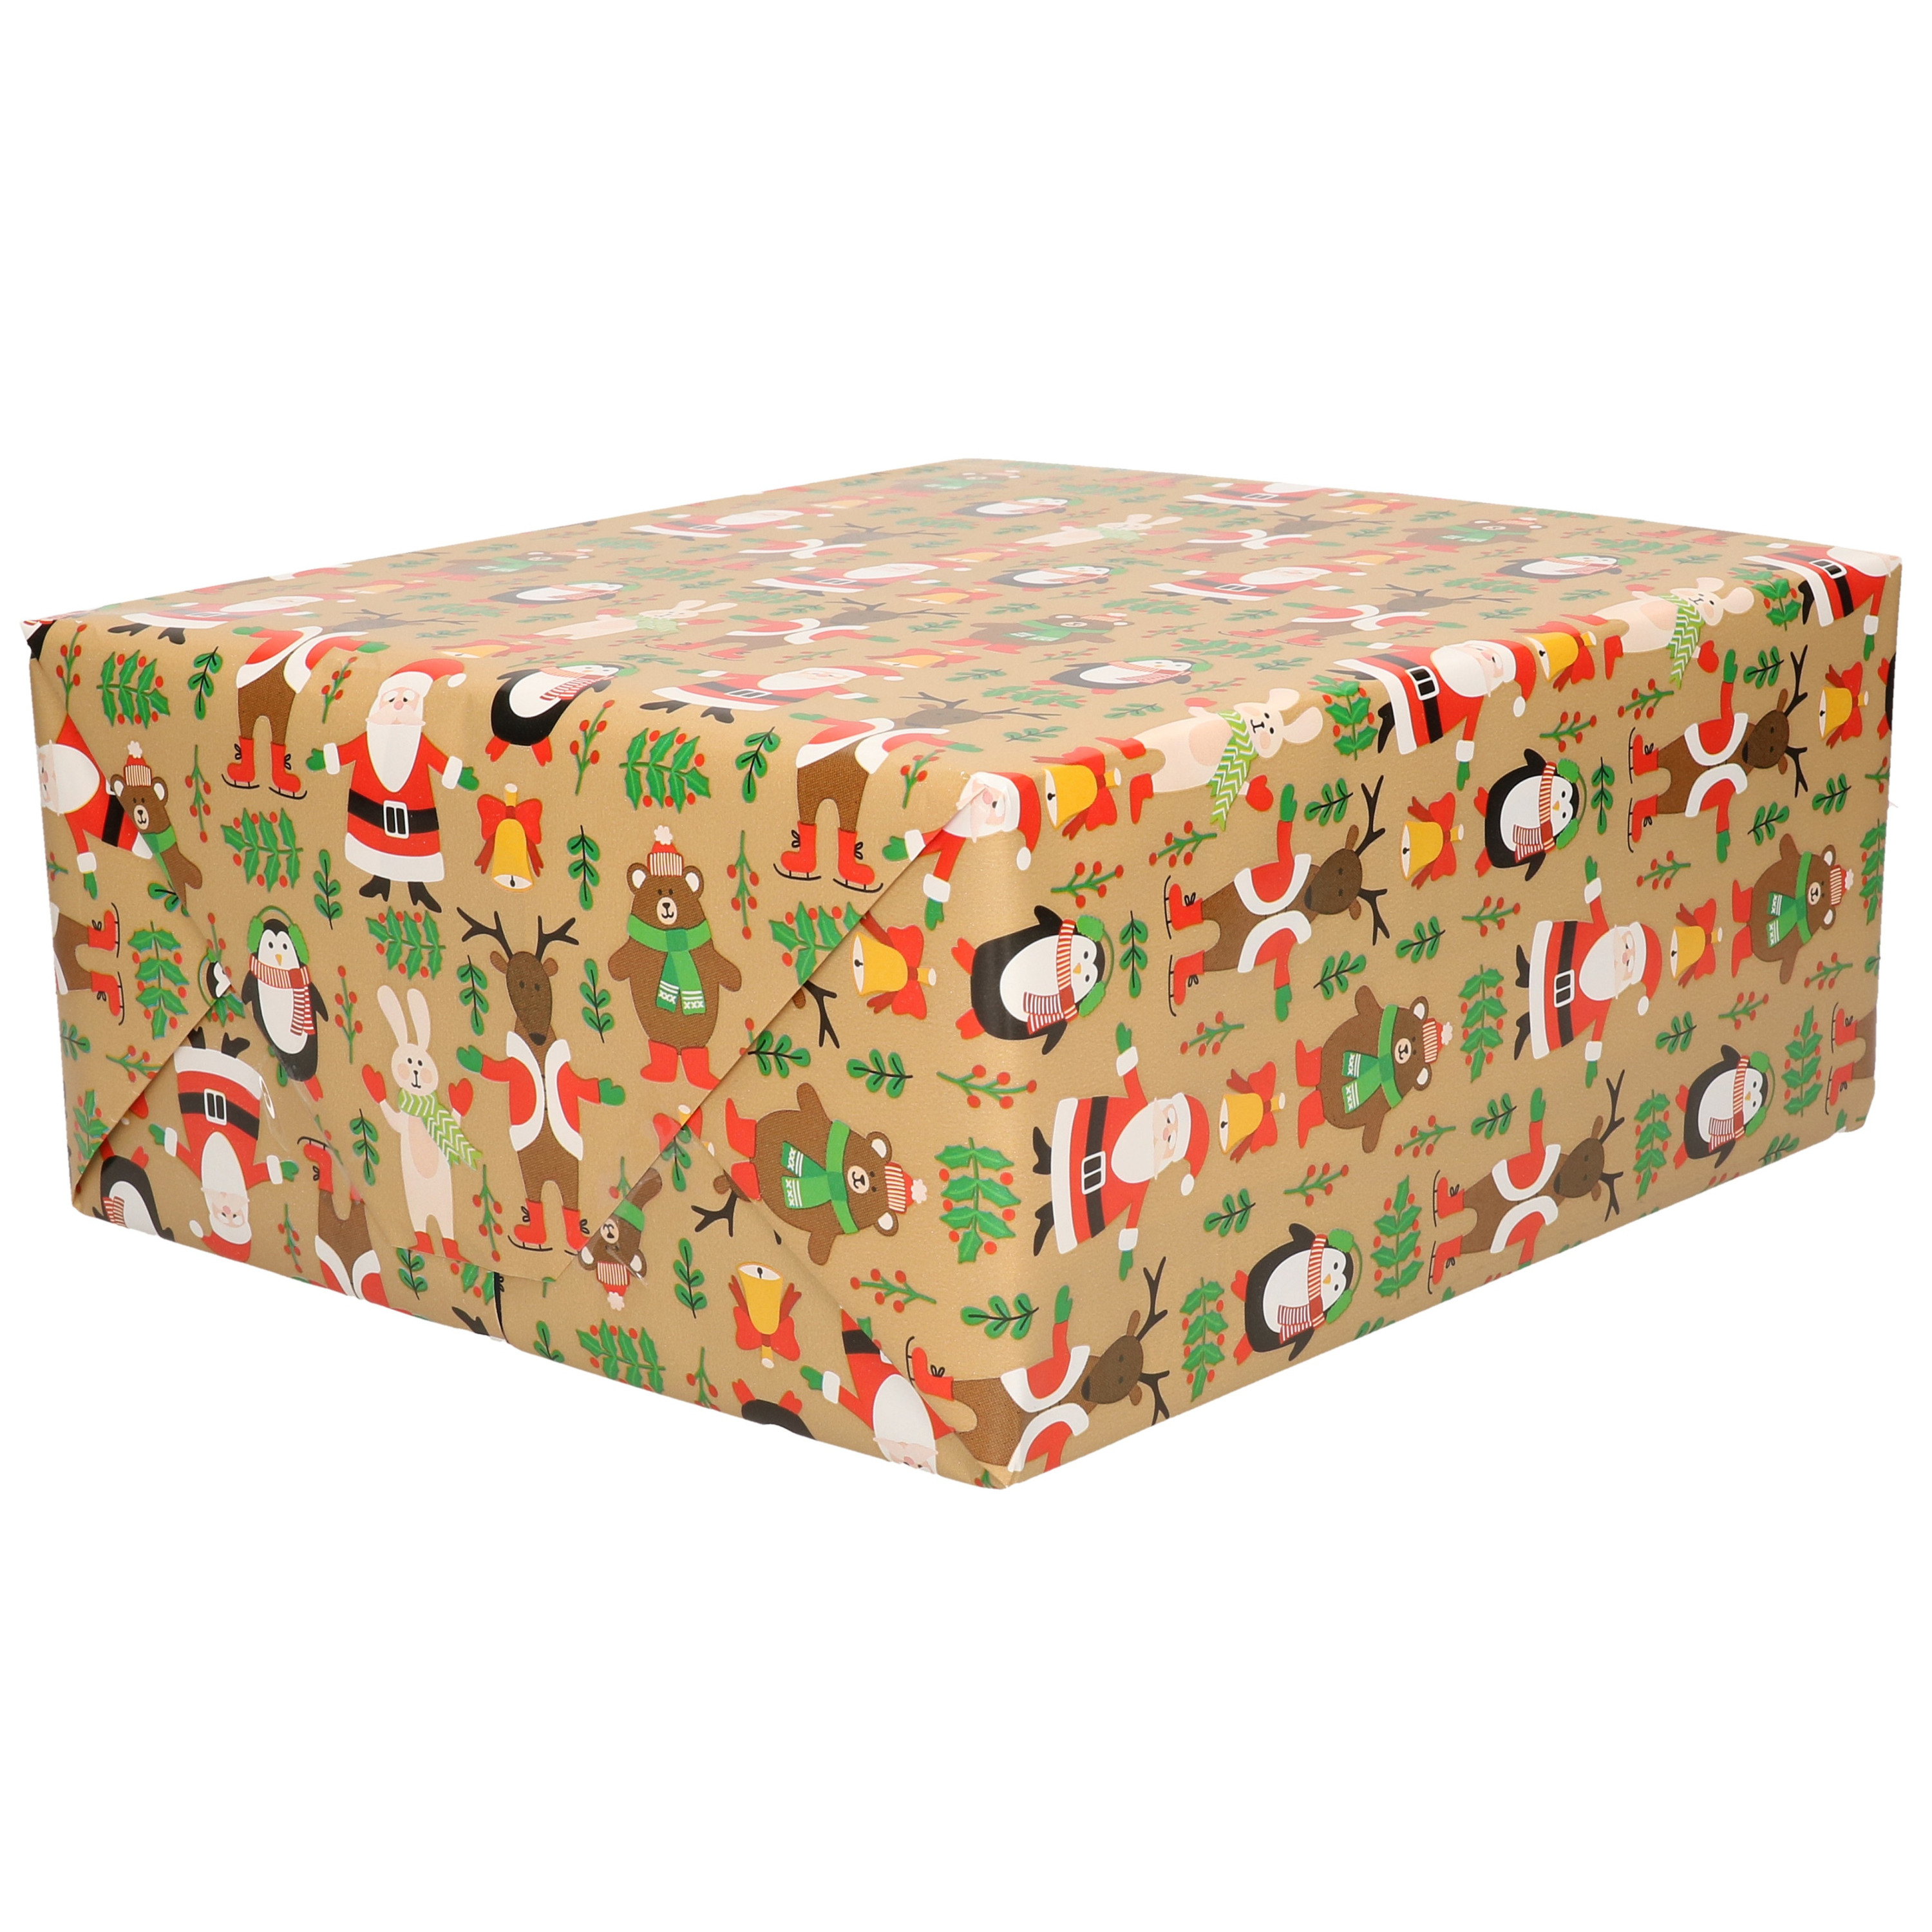 5x Rollen Kerst inpakpapier/cadeaupapier bruin 2,5 x 0,7 meter